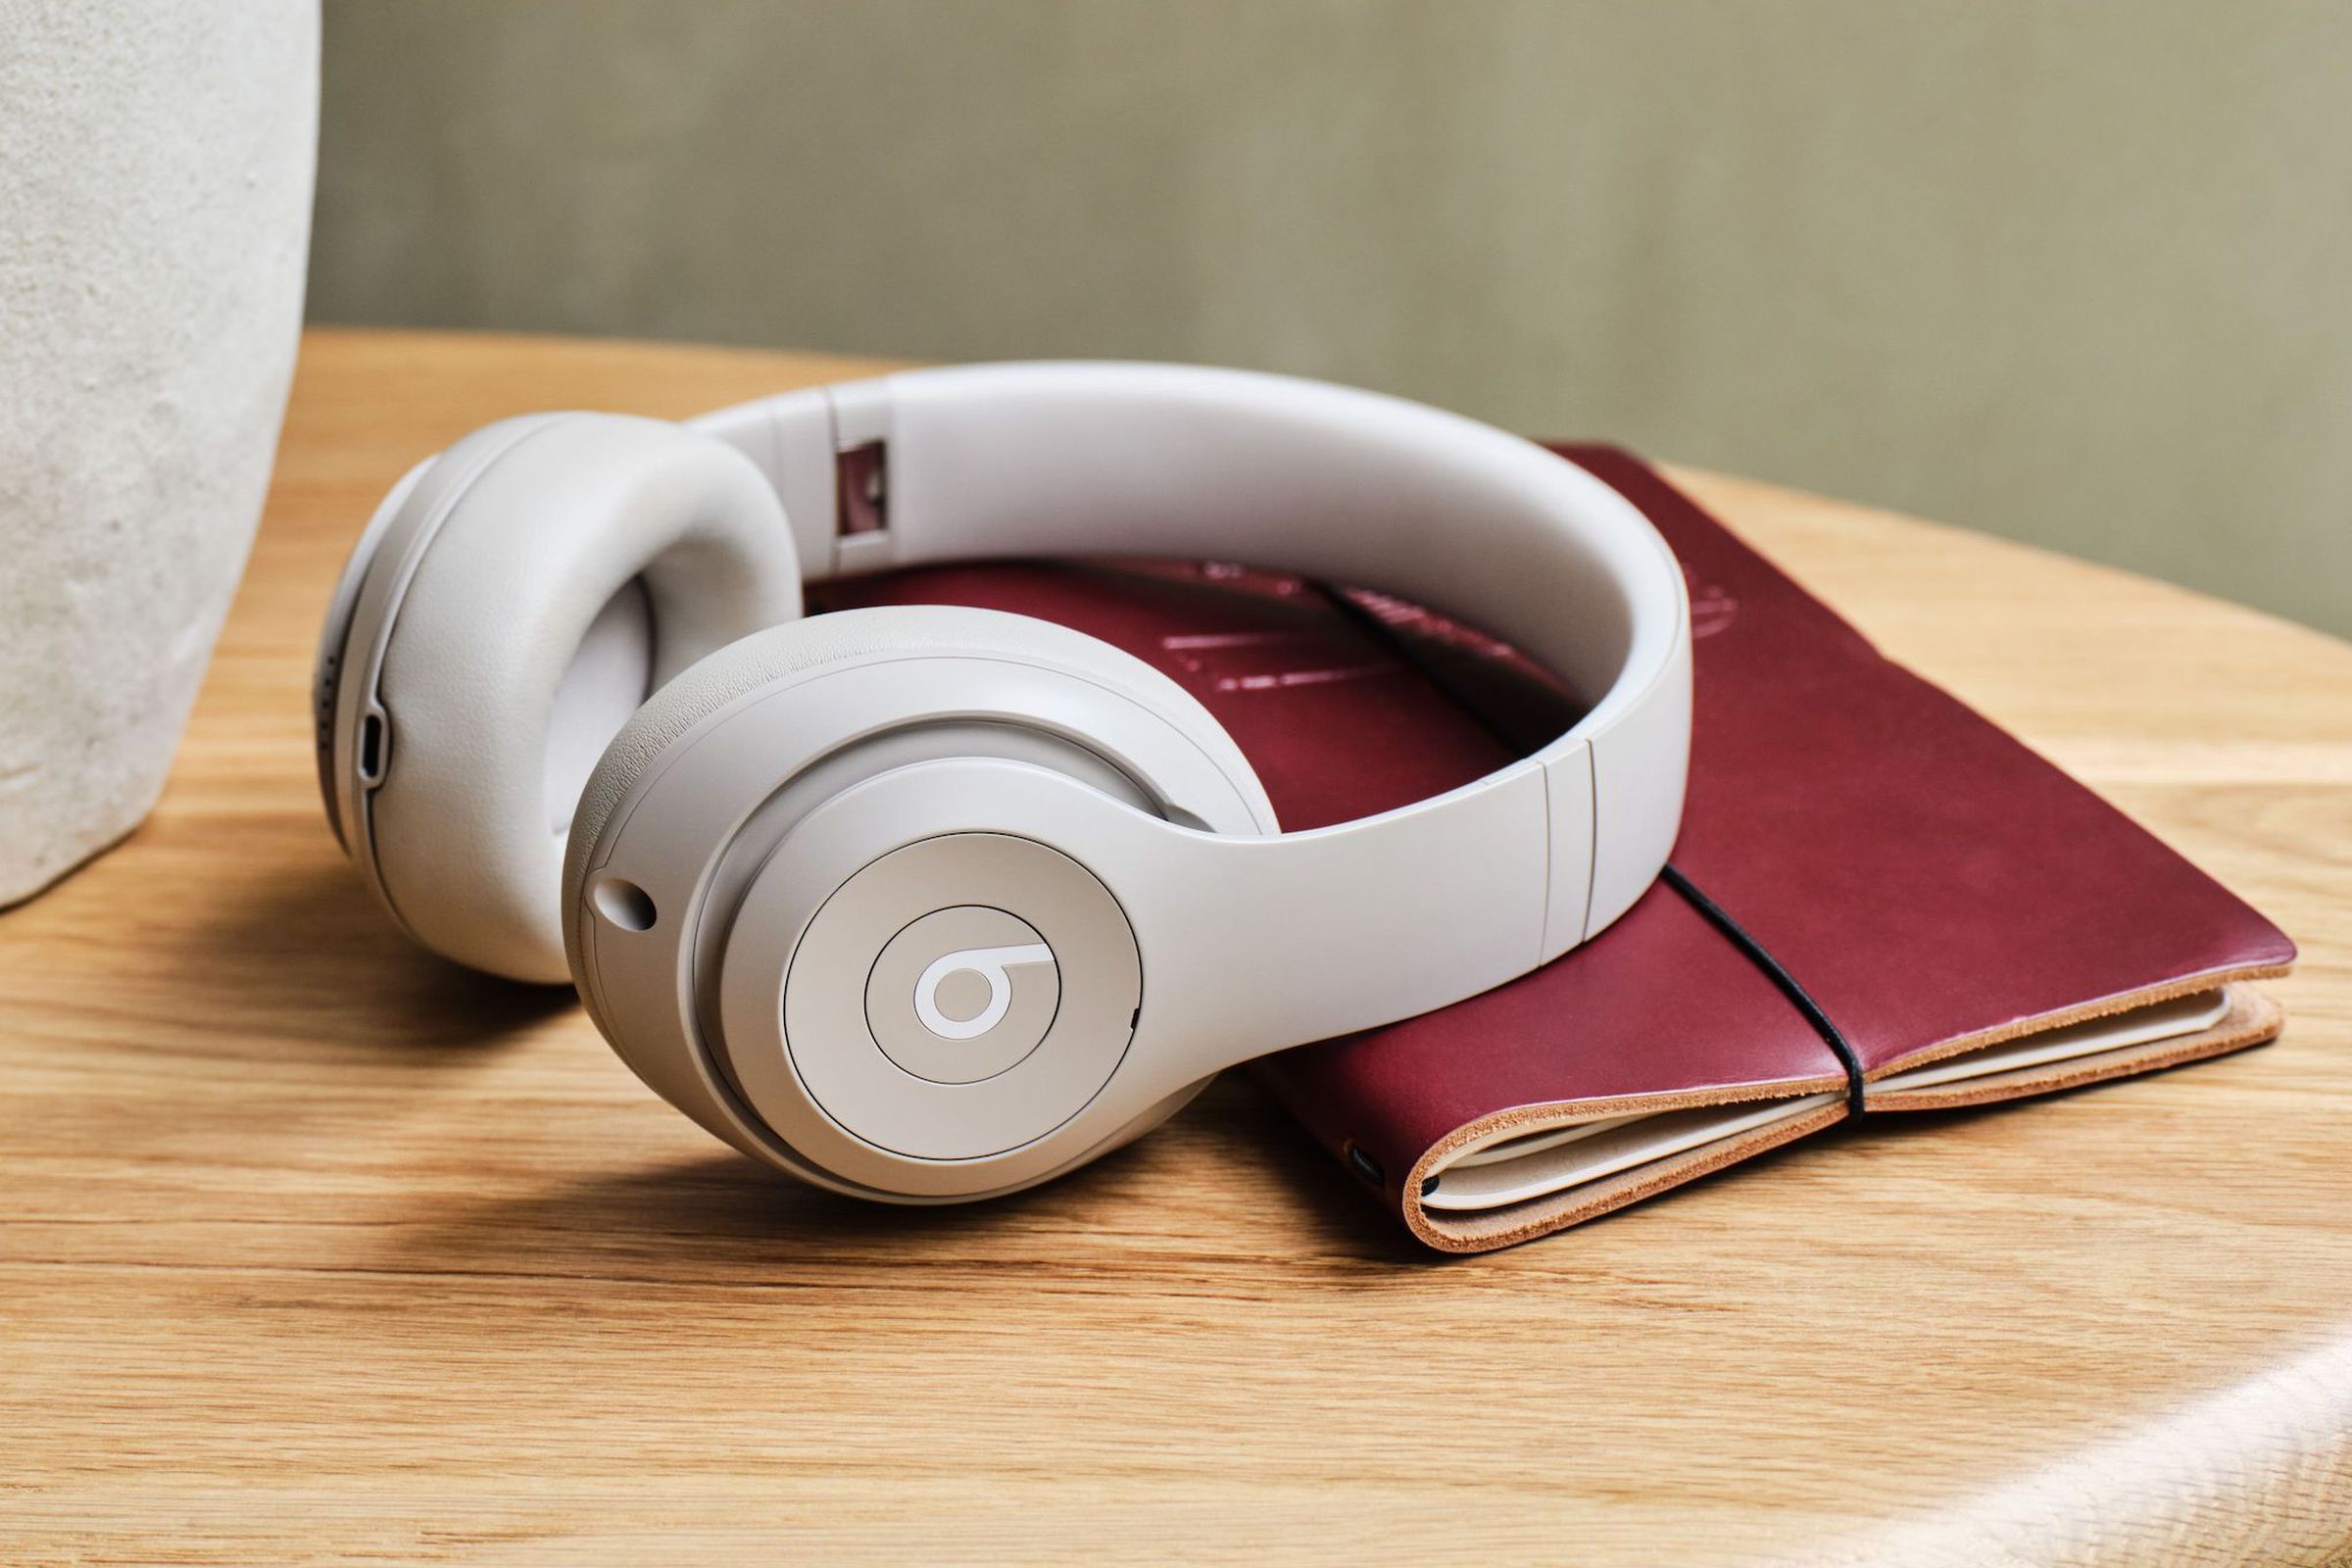 A marketing photo of the Beats Studio Pro headphones.